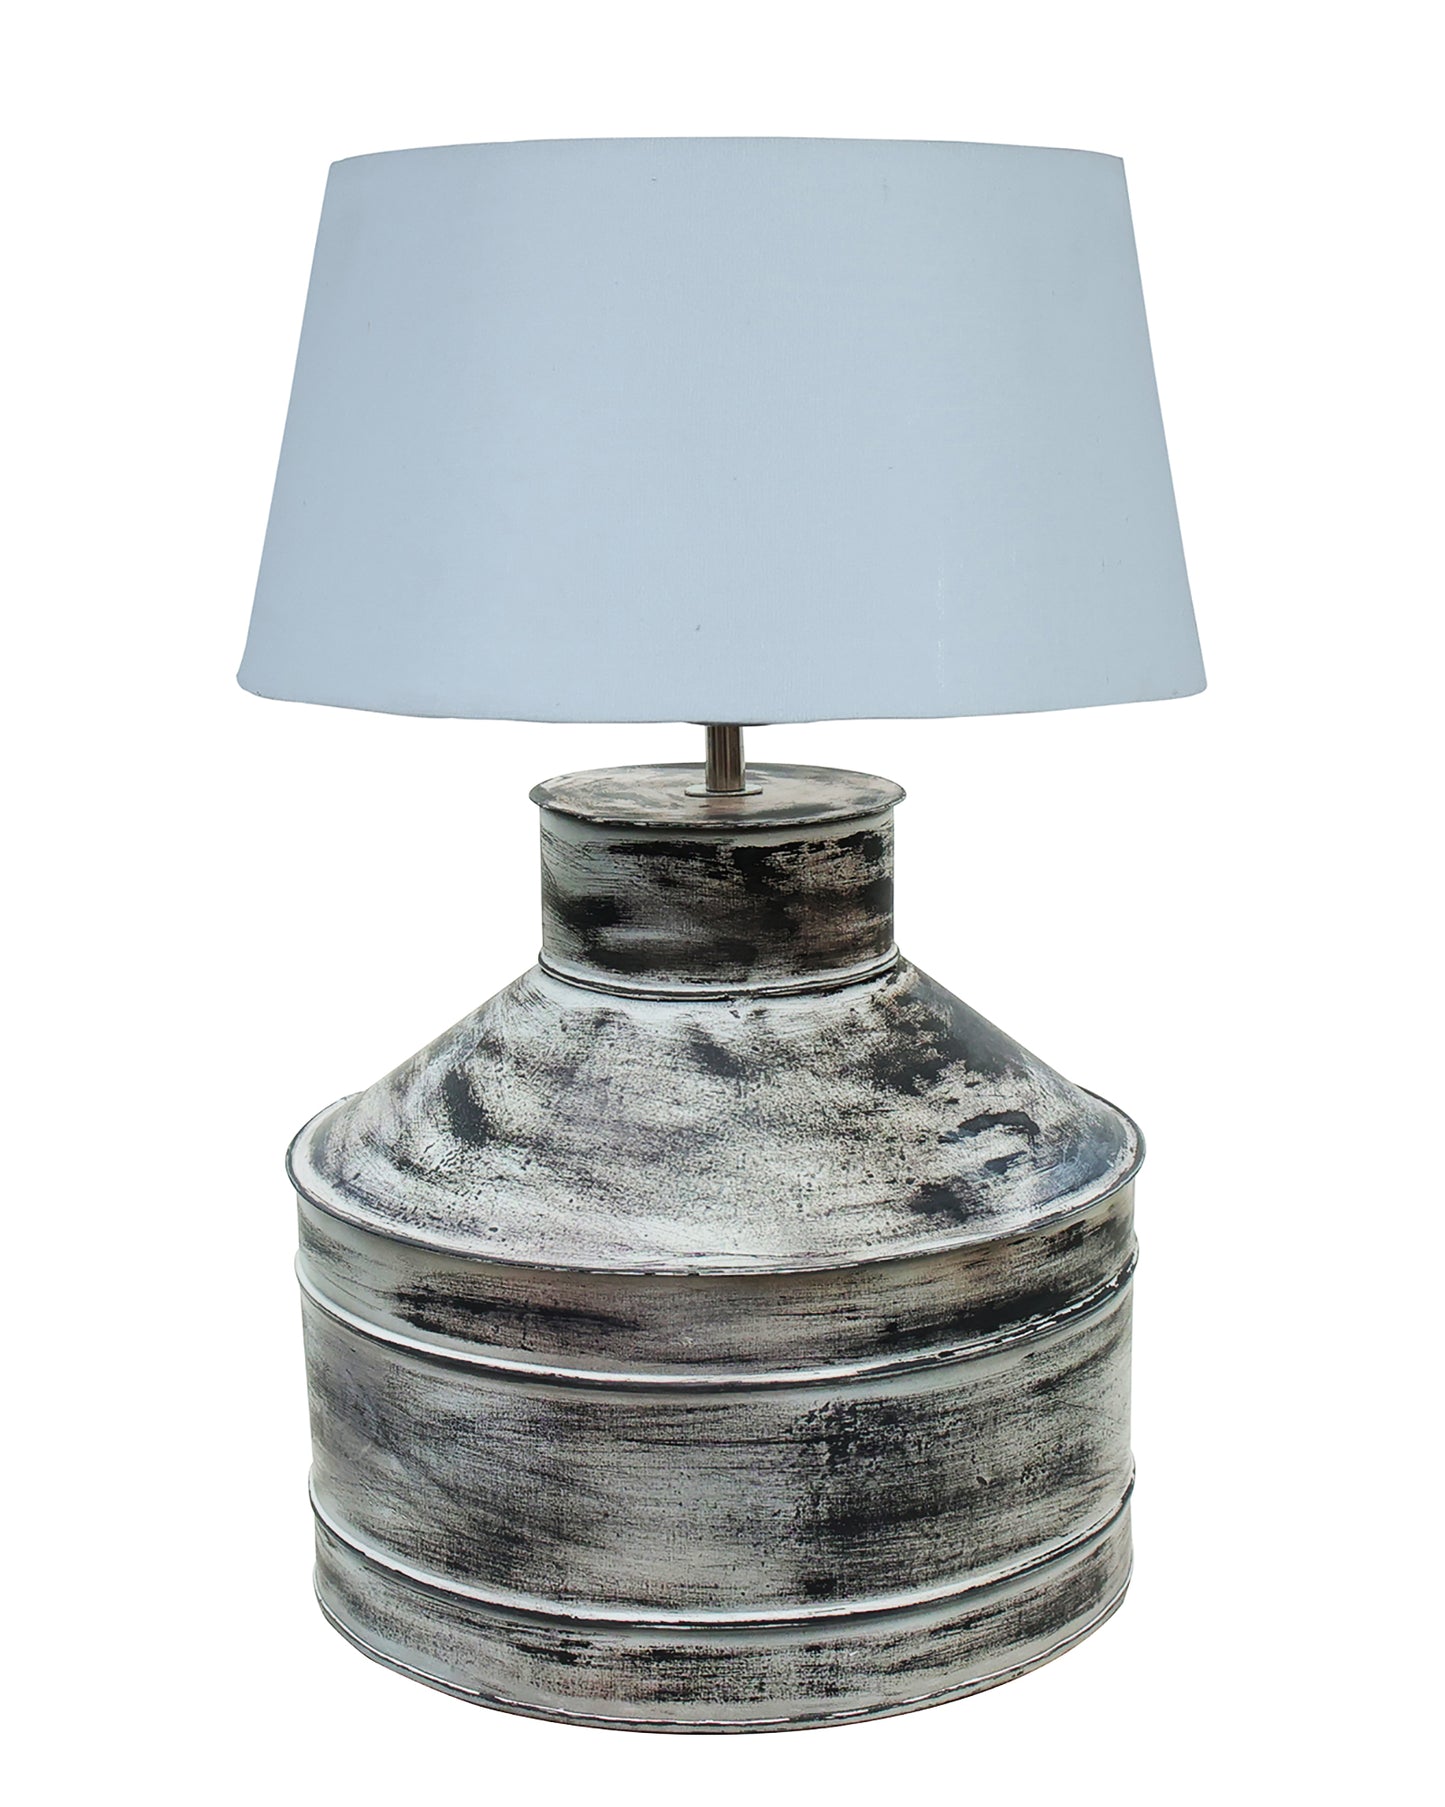 Rustic Milk Gagar Table Lamp with drum shade, Whitewash Finish